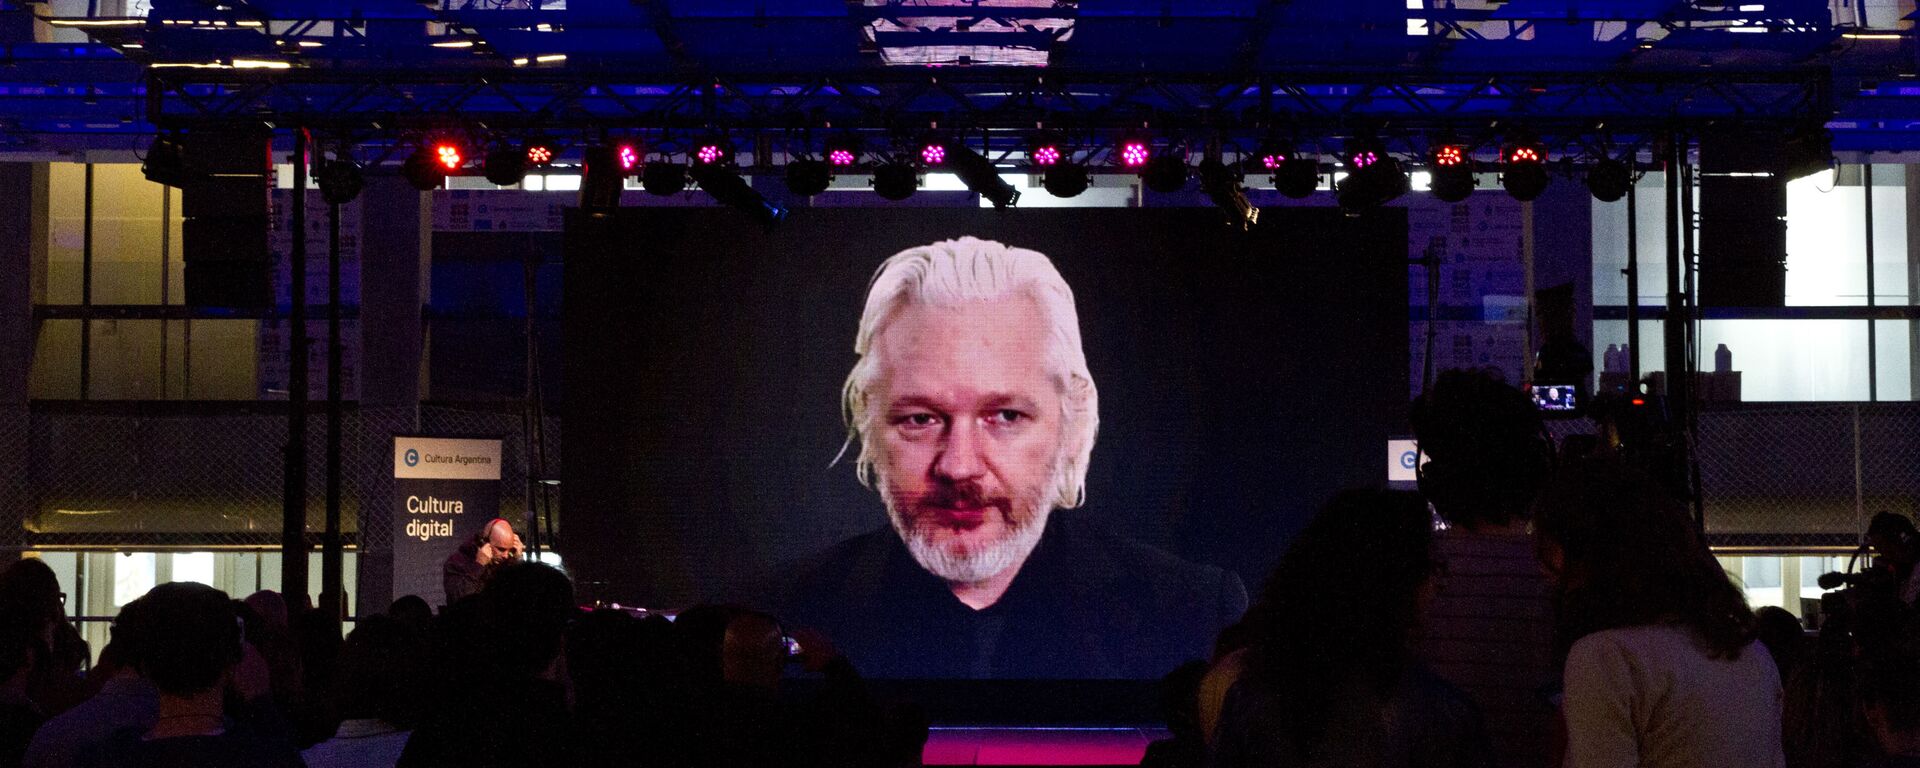 Julian Assange durante una vídeoconferencia - Sputnik Mundo, 1920, 30.04.2021